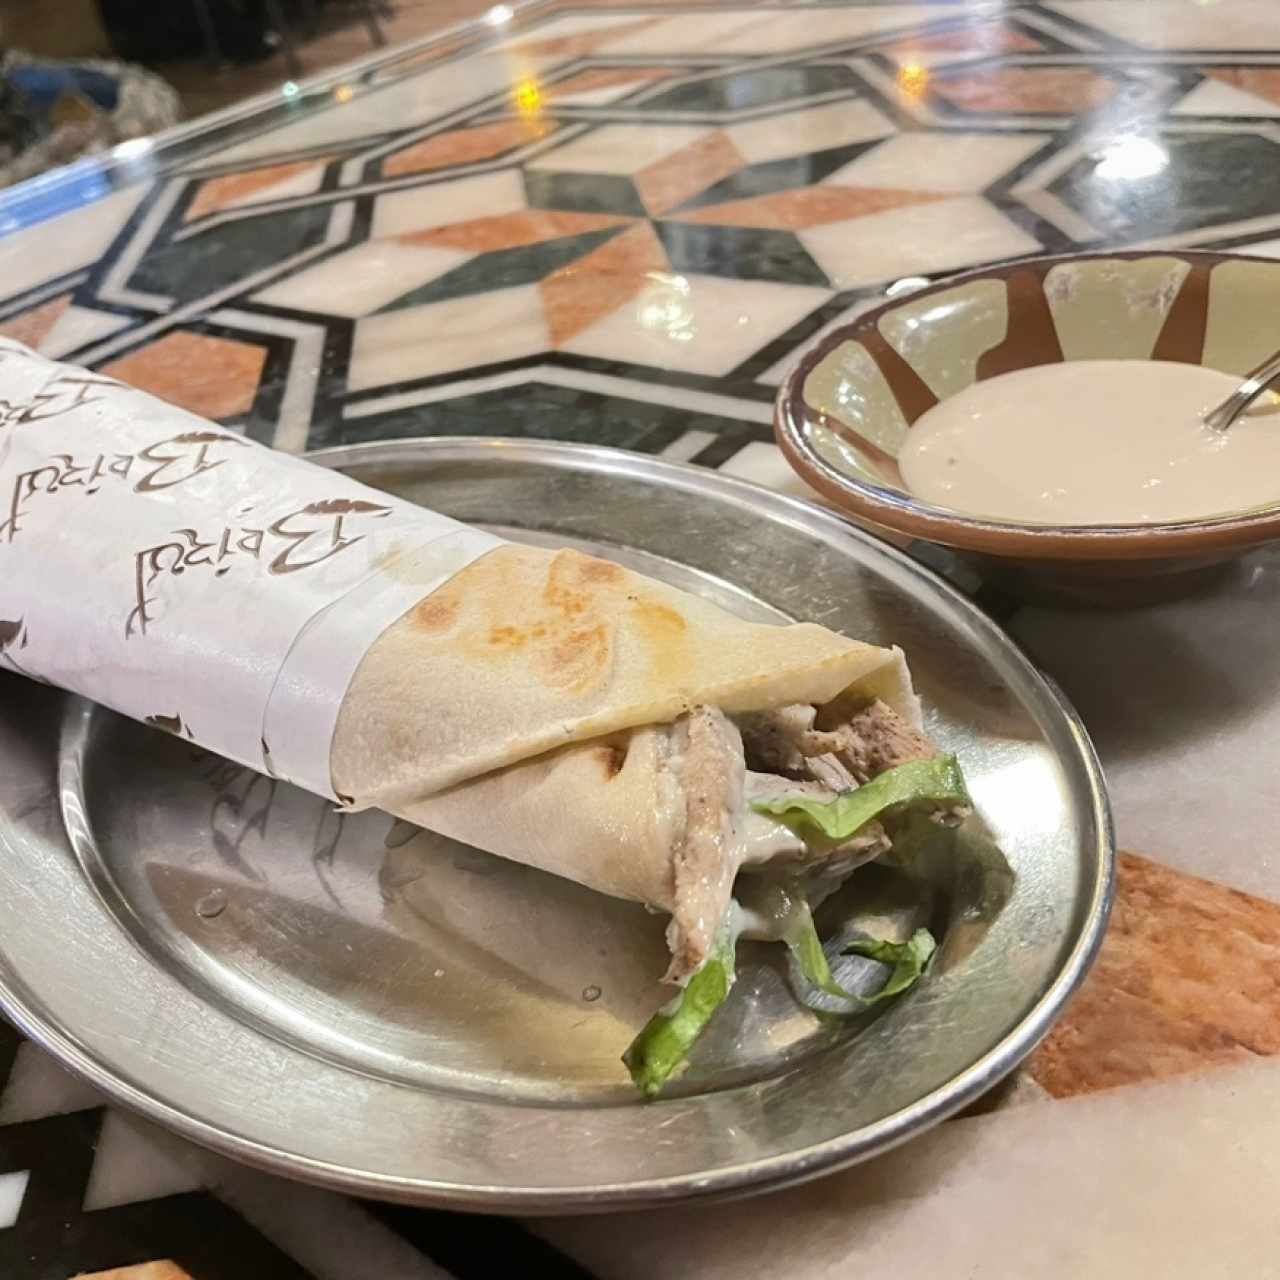 Emparedados - Shawarma de Pollo